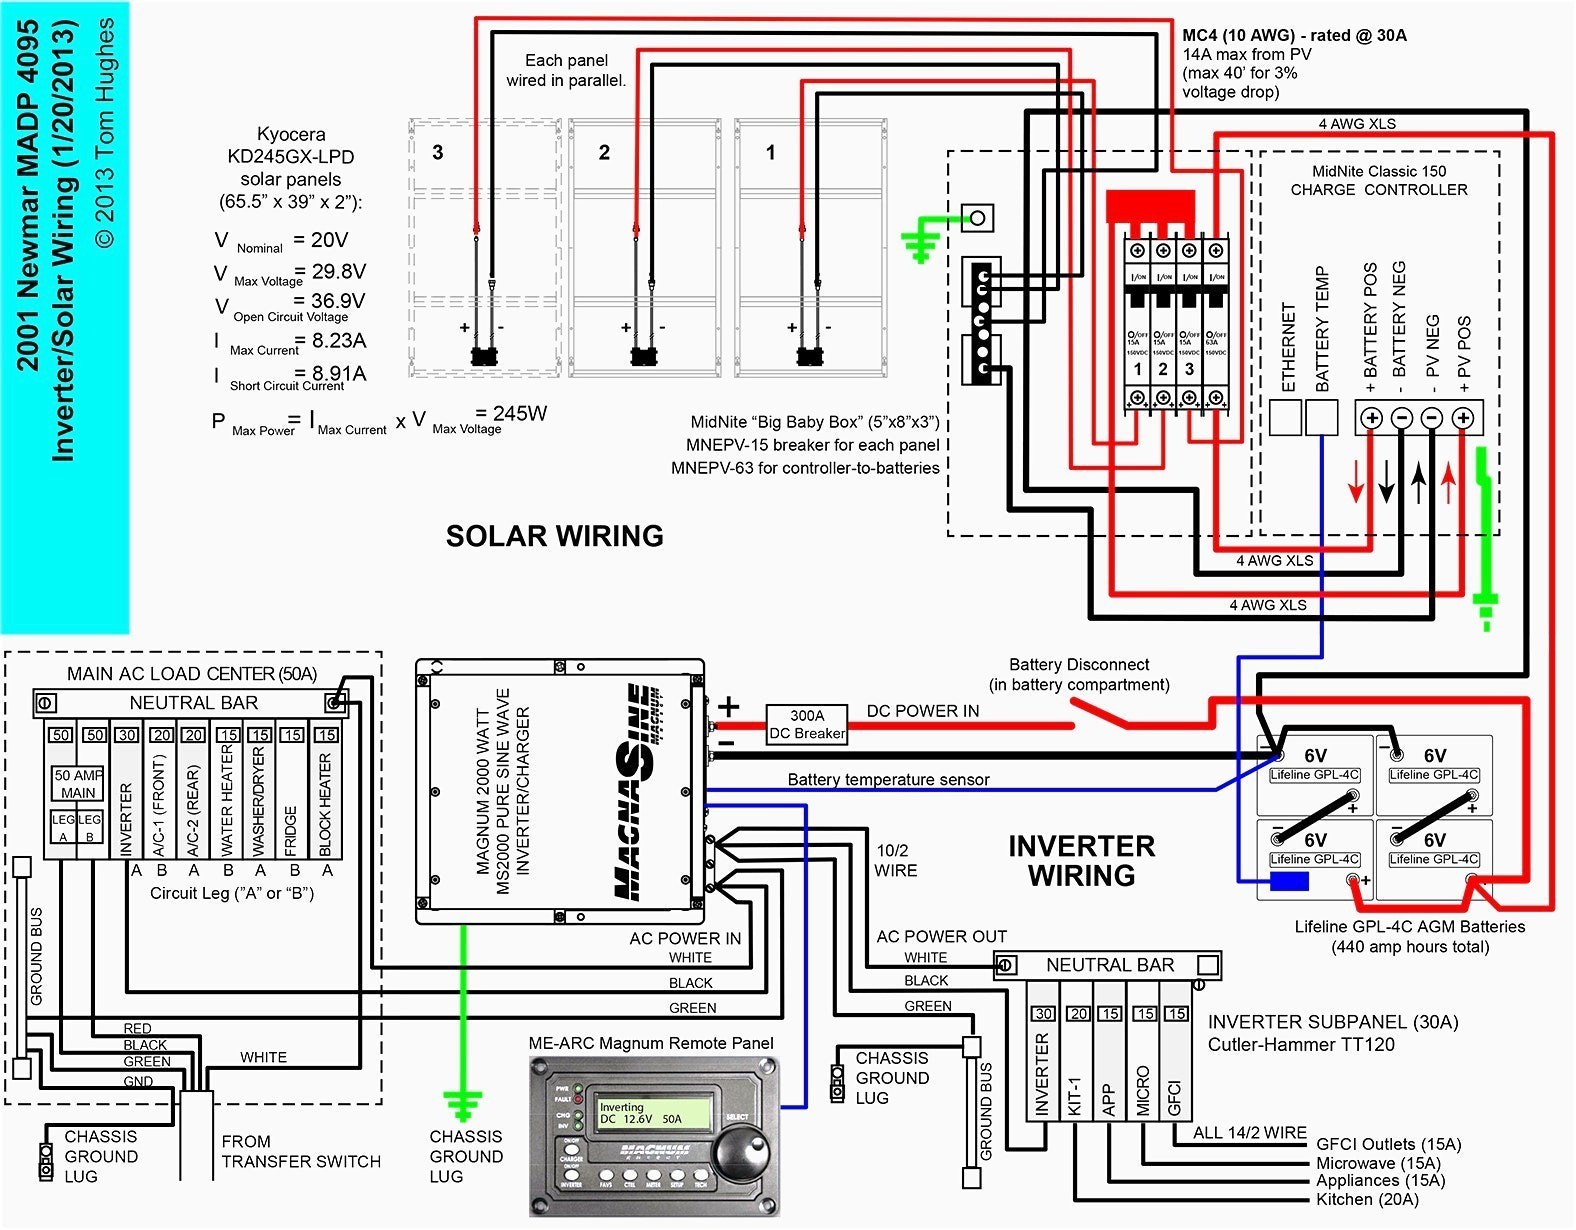 Wiring Diagram for Home Inverter New Wiring Diagram for Rv Steps Best Travel Trailer Inverter Wiring